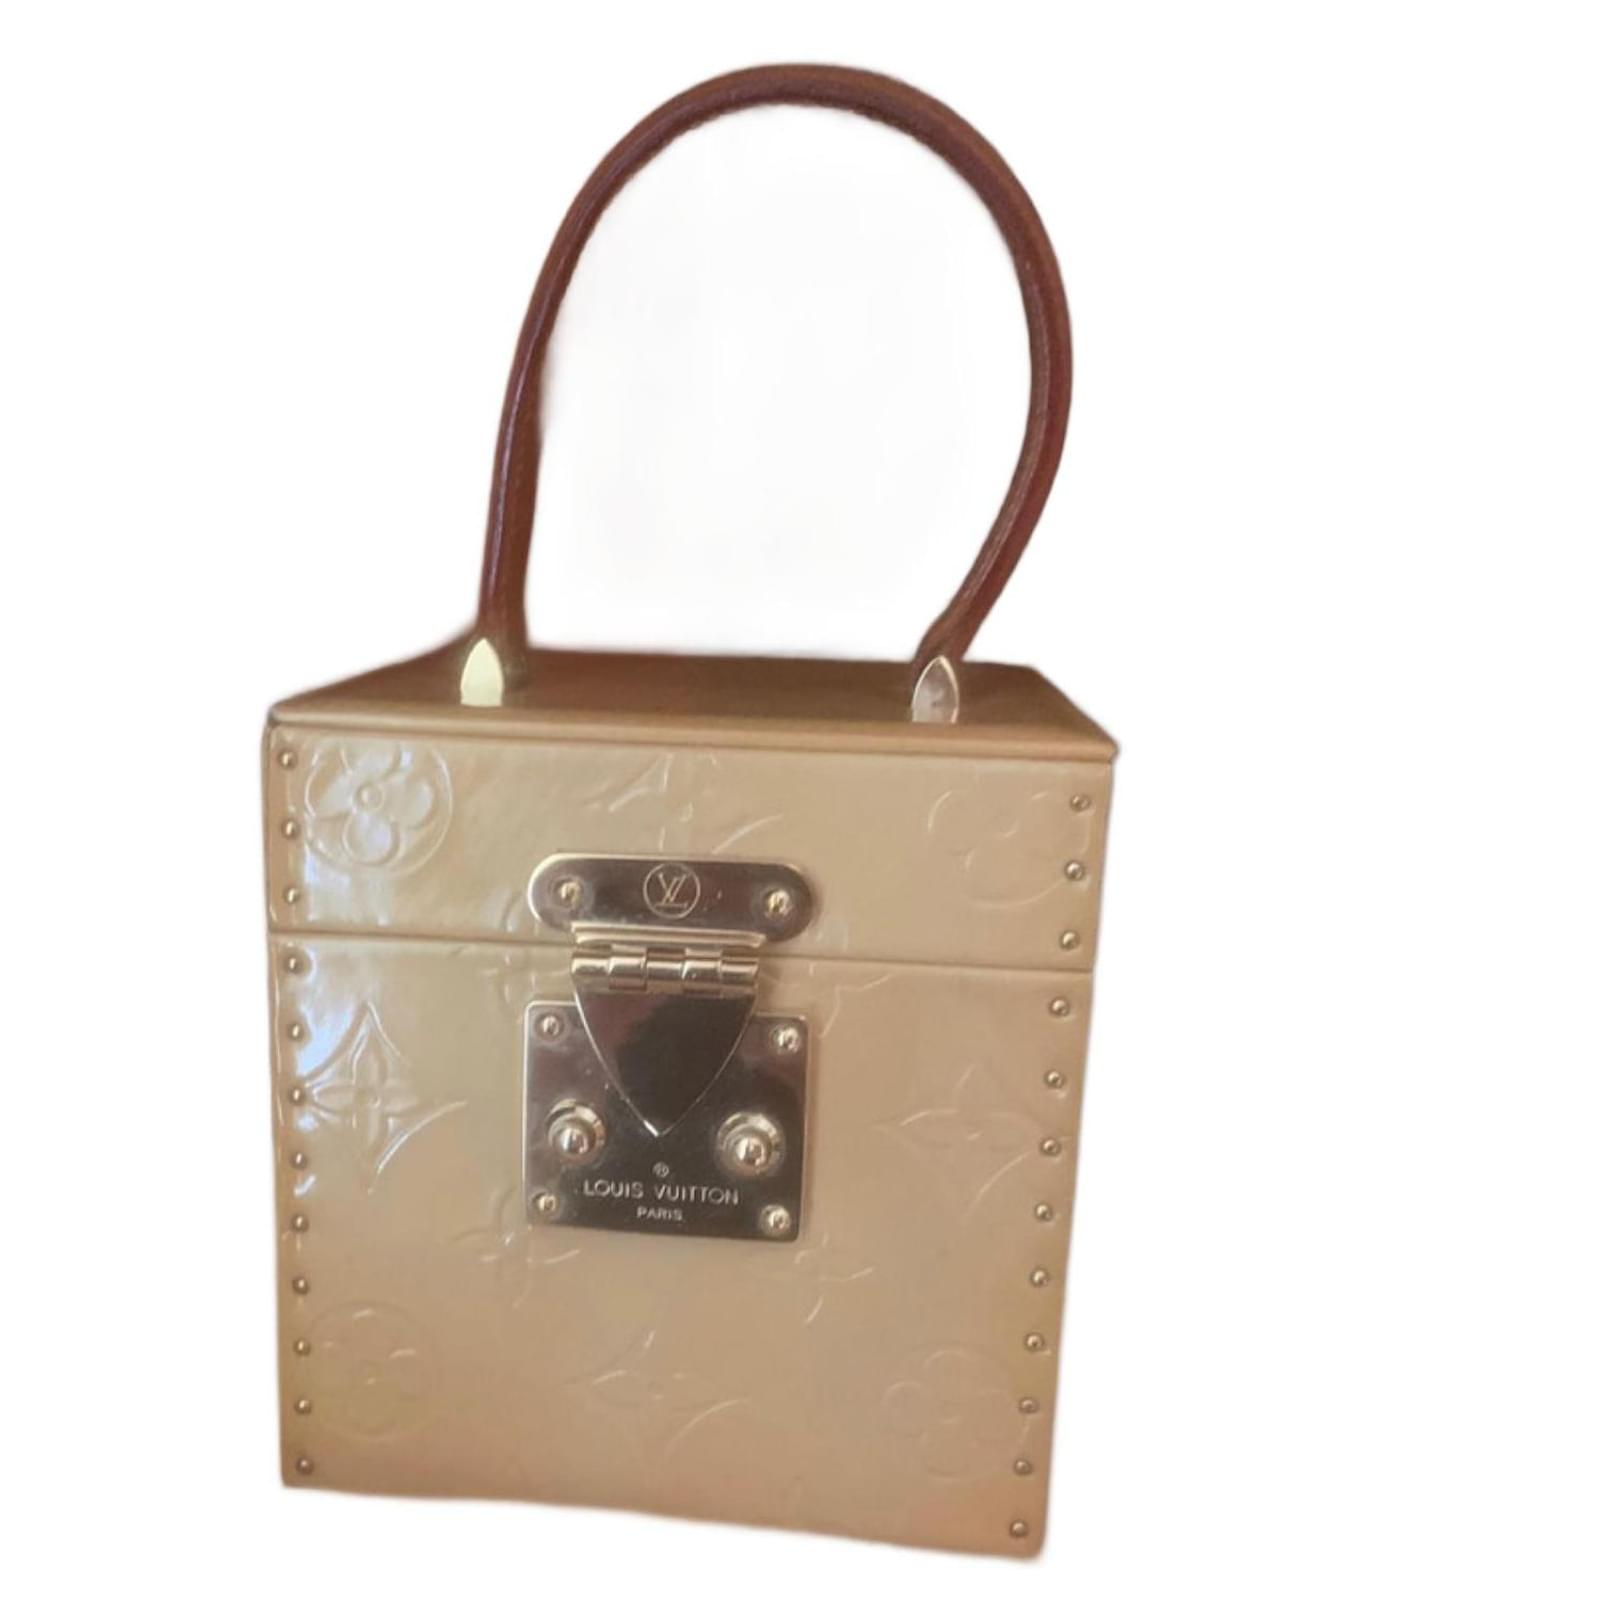 Bleecker patent leather handbag Louis Vuitton Beige in Patent